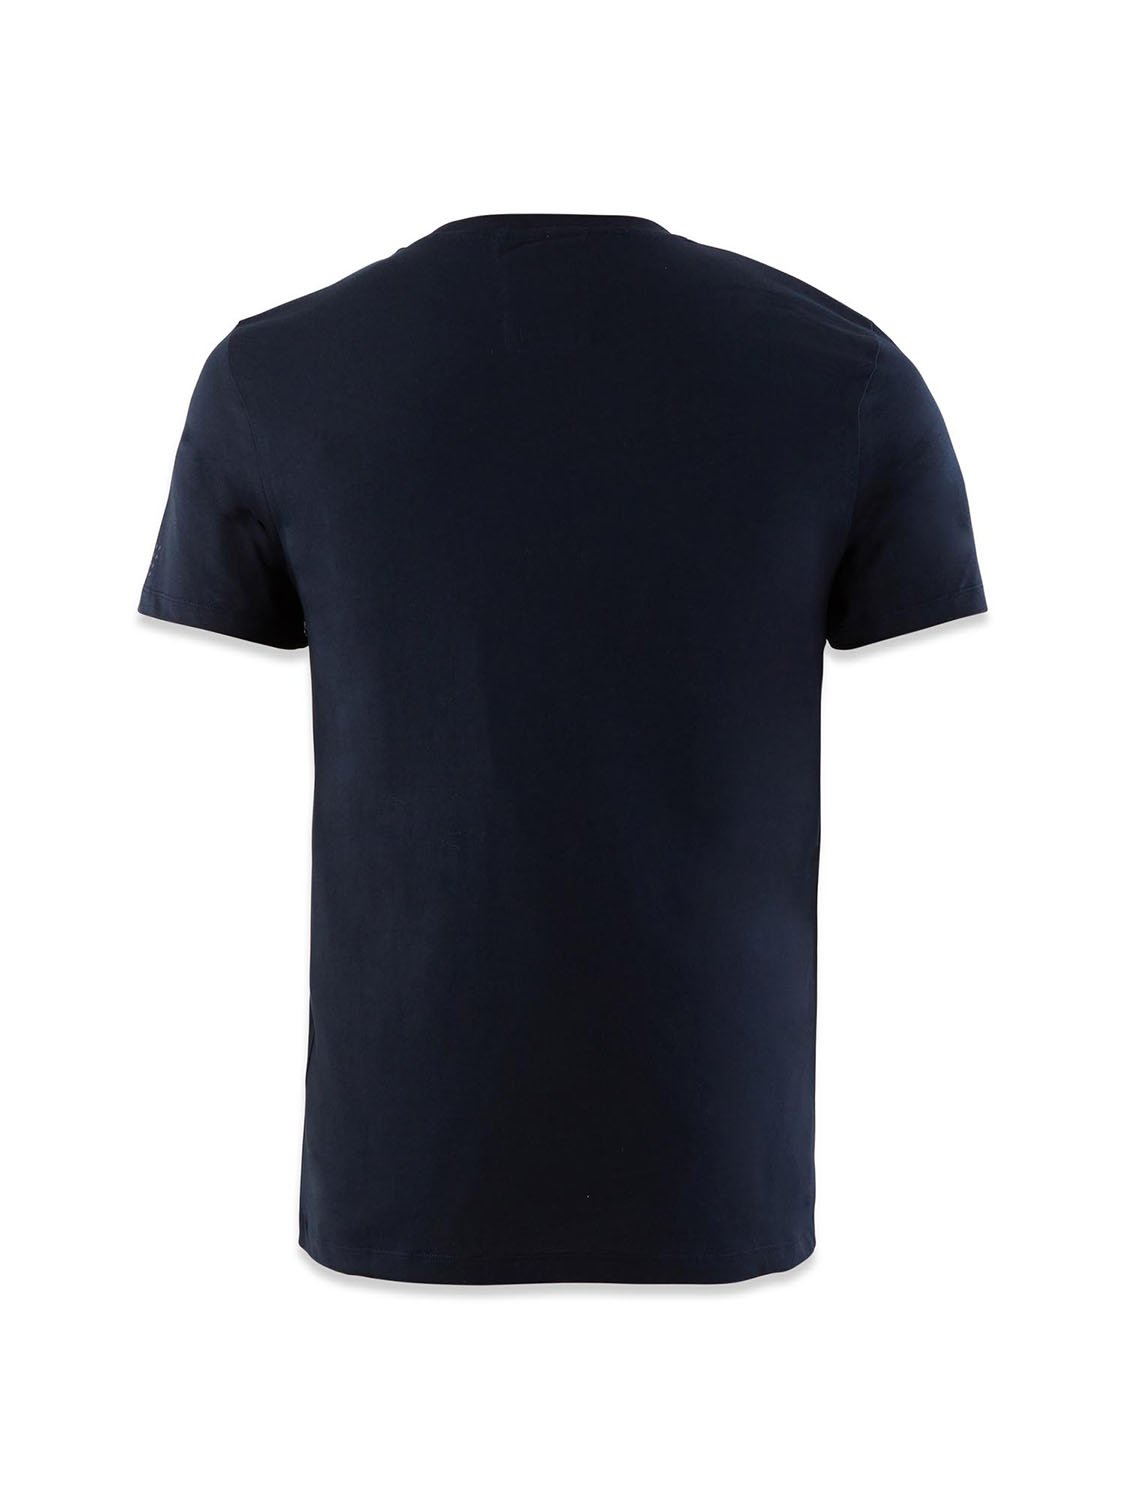 Tee-Shirt Homme Coton Biologique Marine